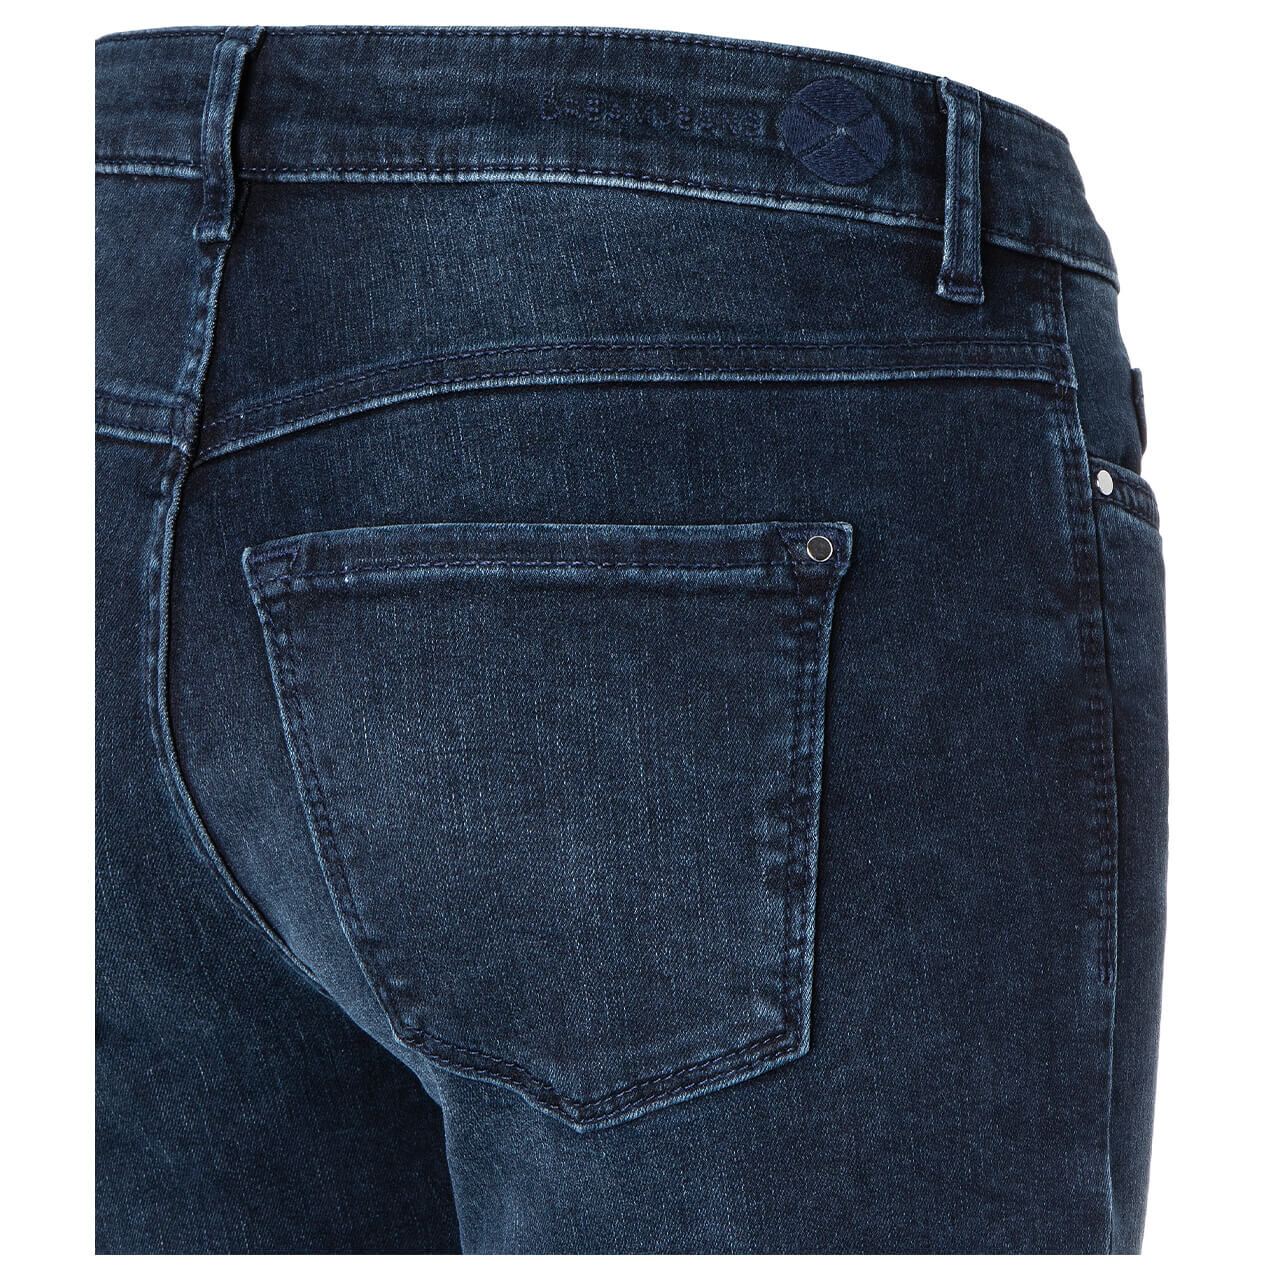 MAC Dream Skinny Jeans dark blue wash